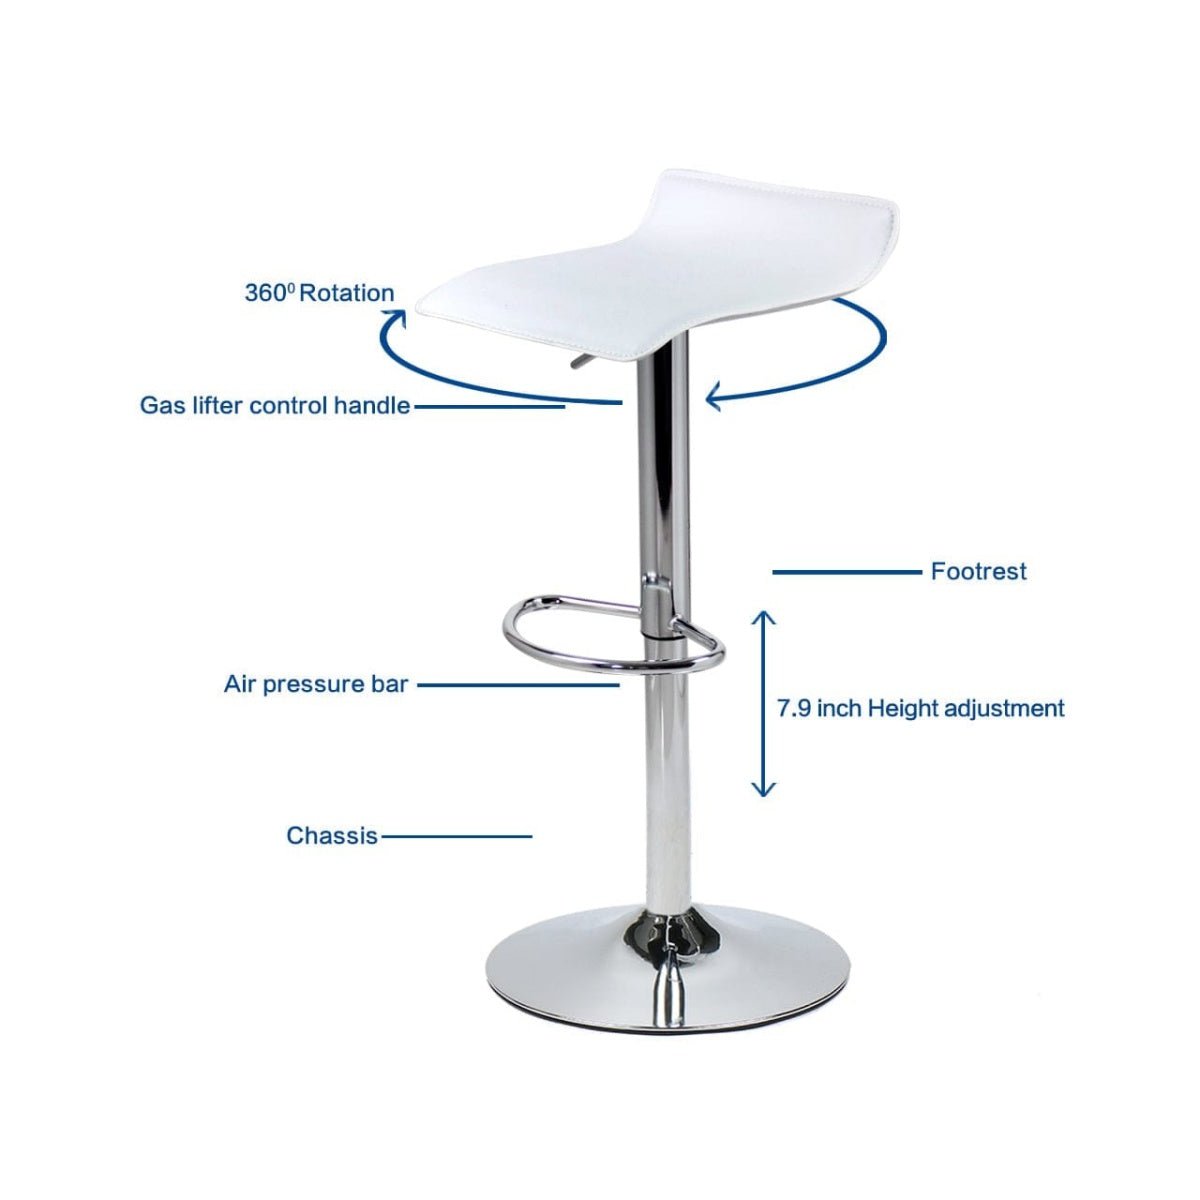 Elecwish white bar stool OW002 features